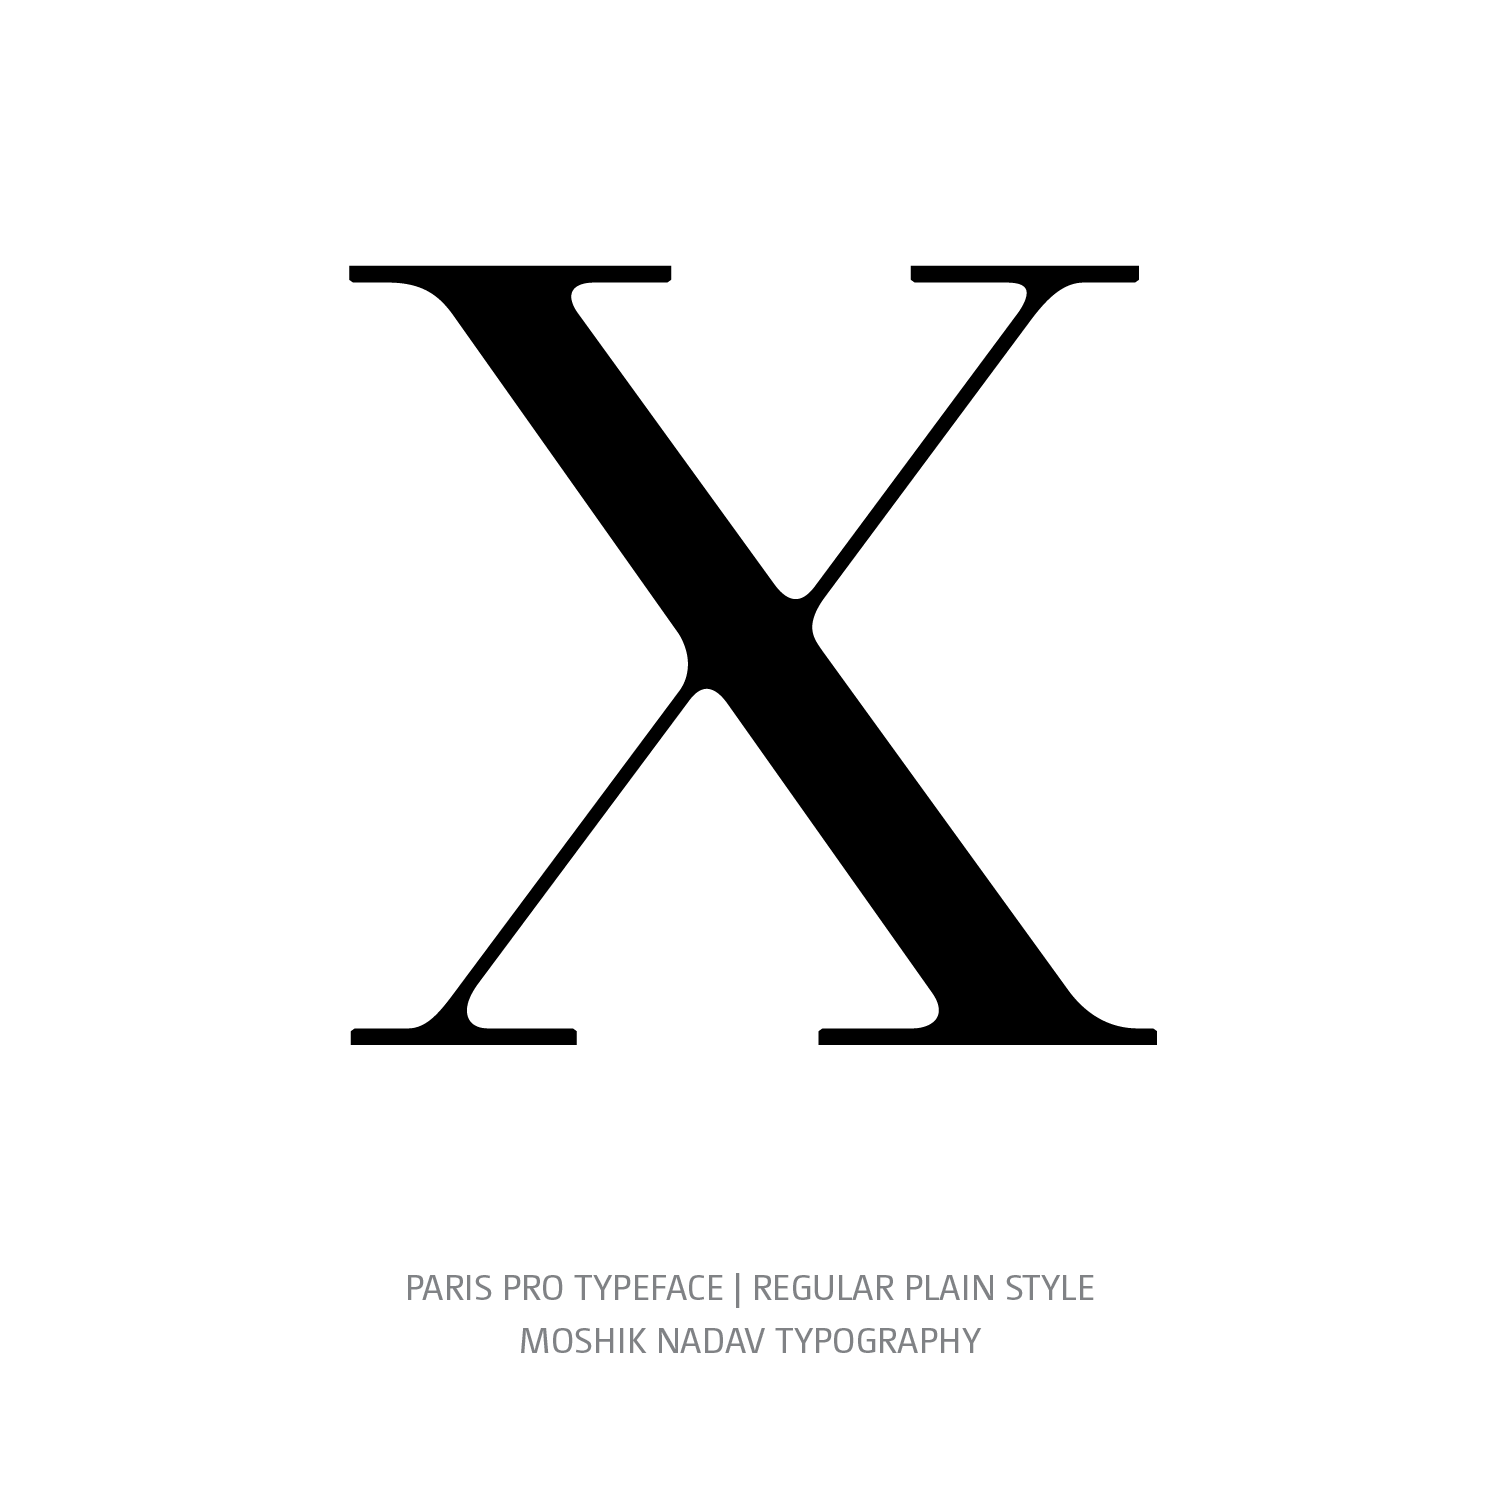 Paris Pro Typeface Regular Plain X